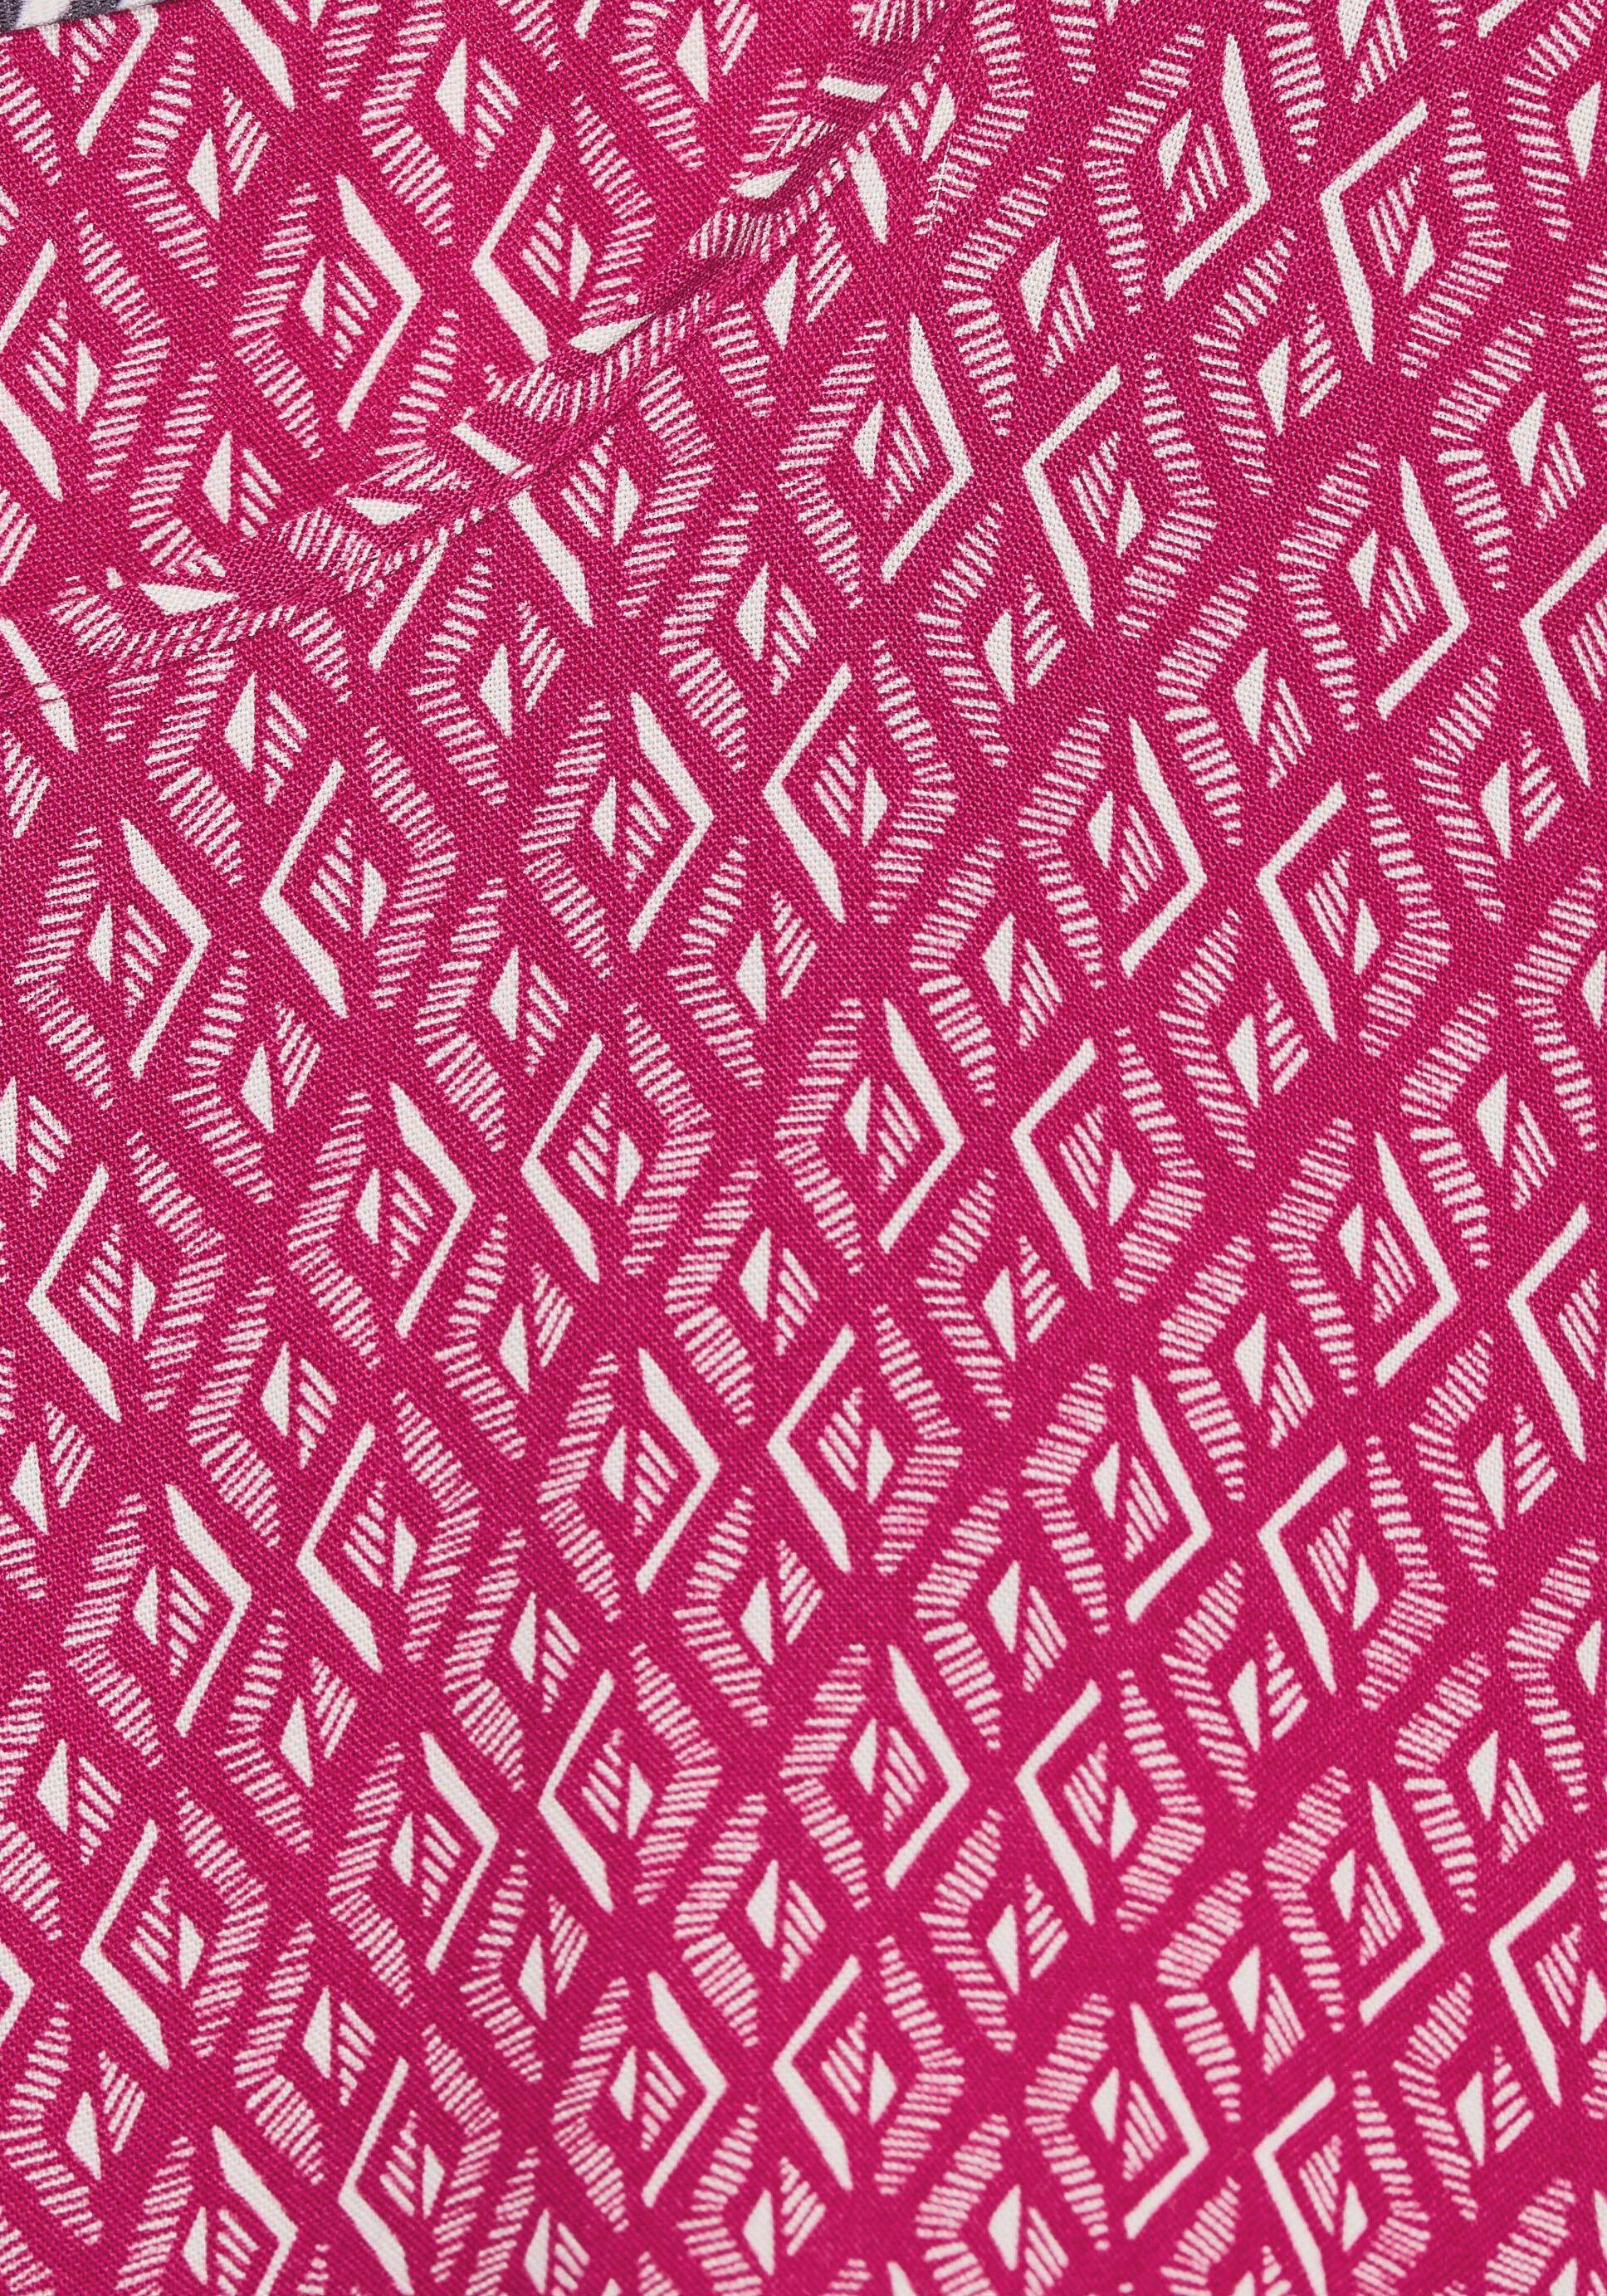 Shirtbluse pink mit Knotendetail Cecil Saum am